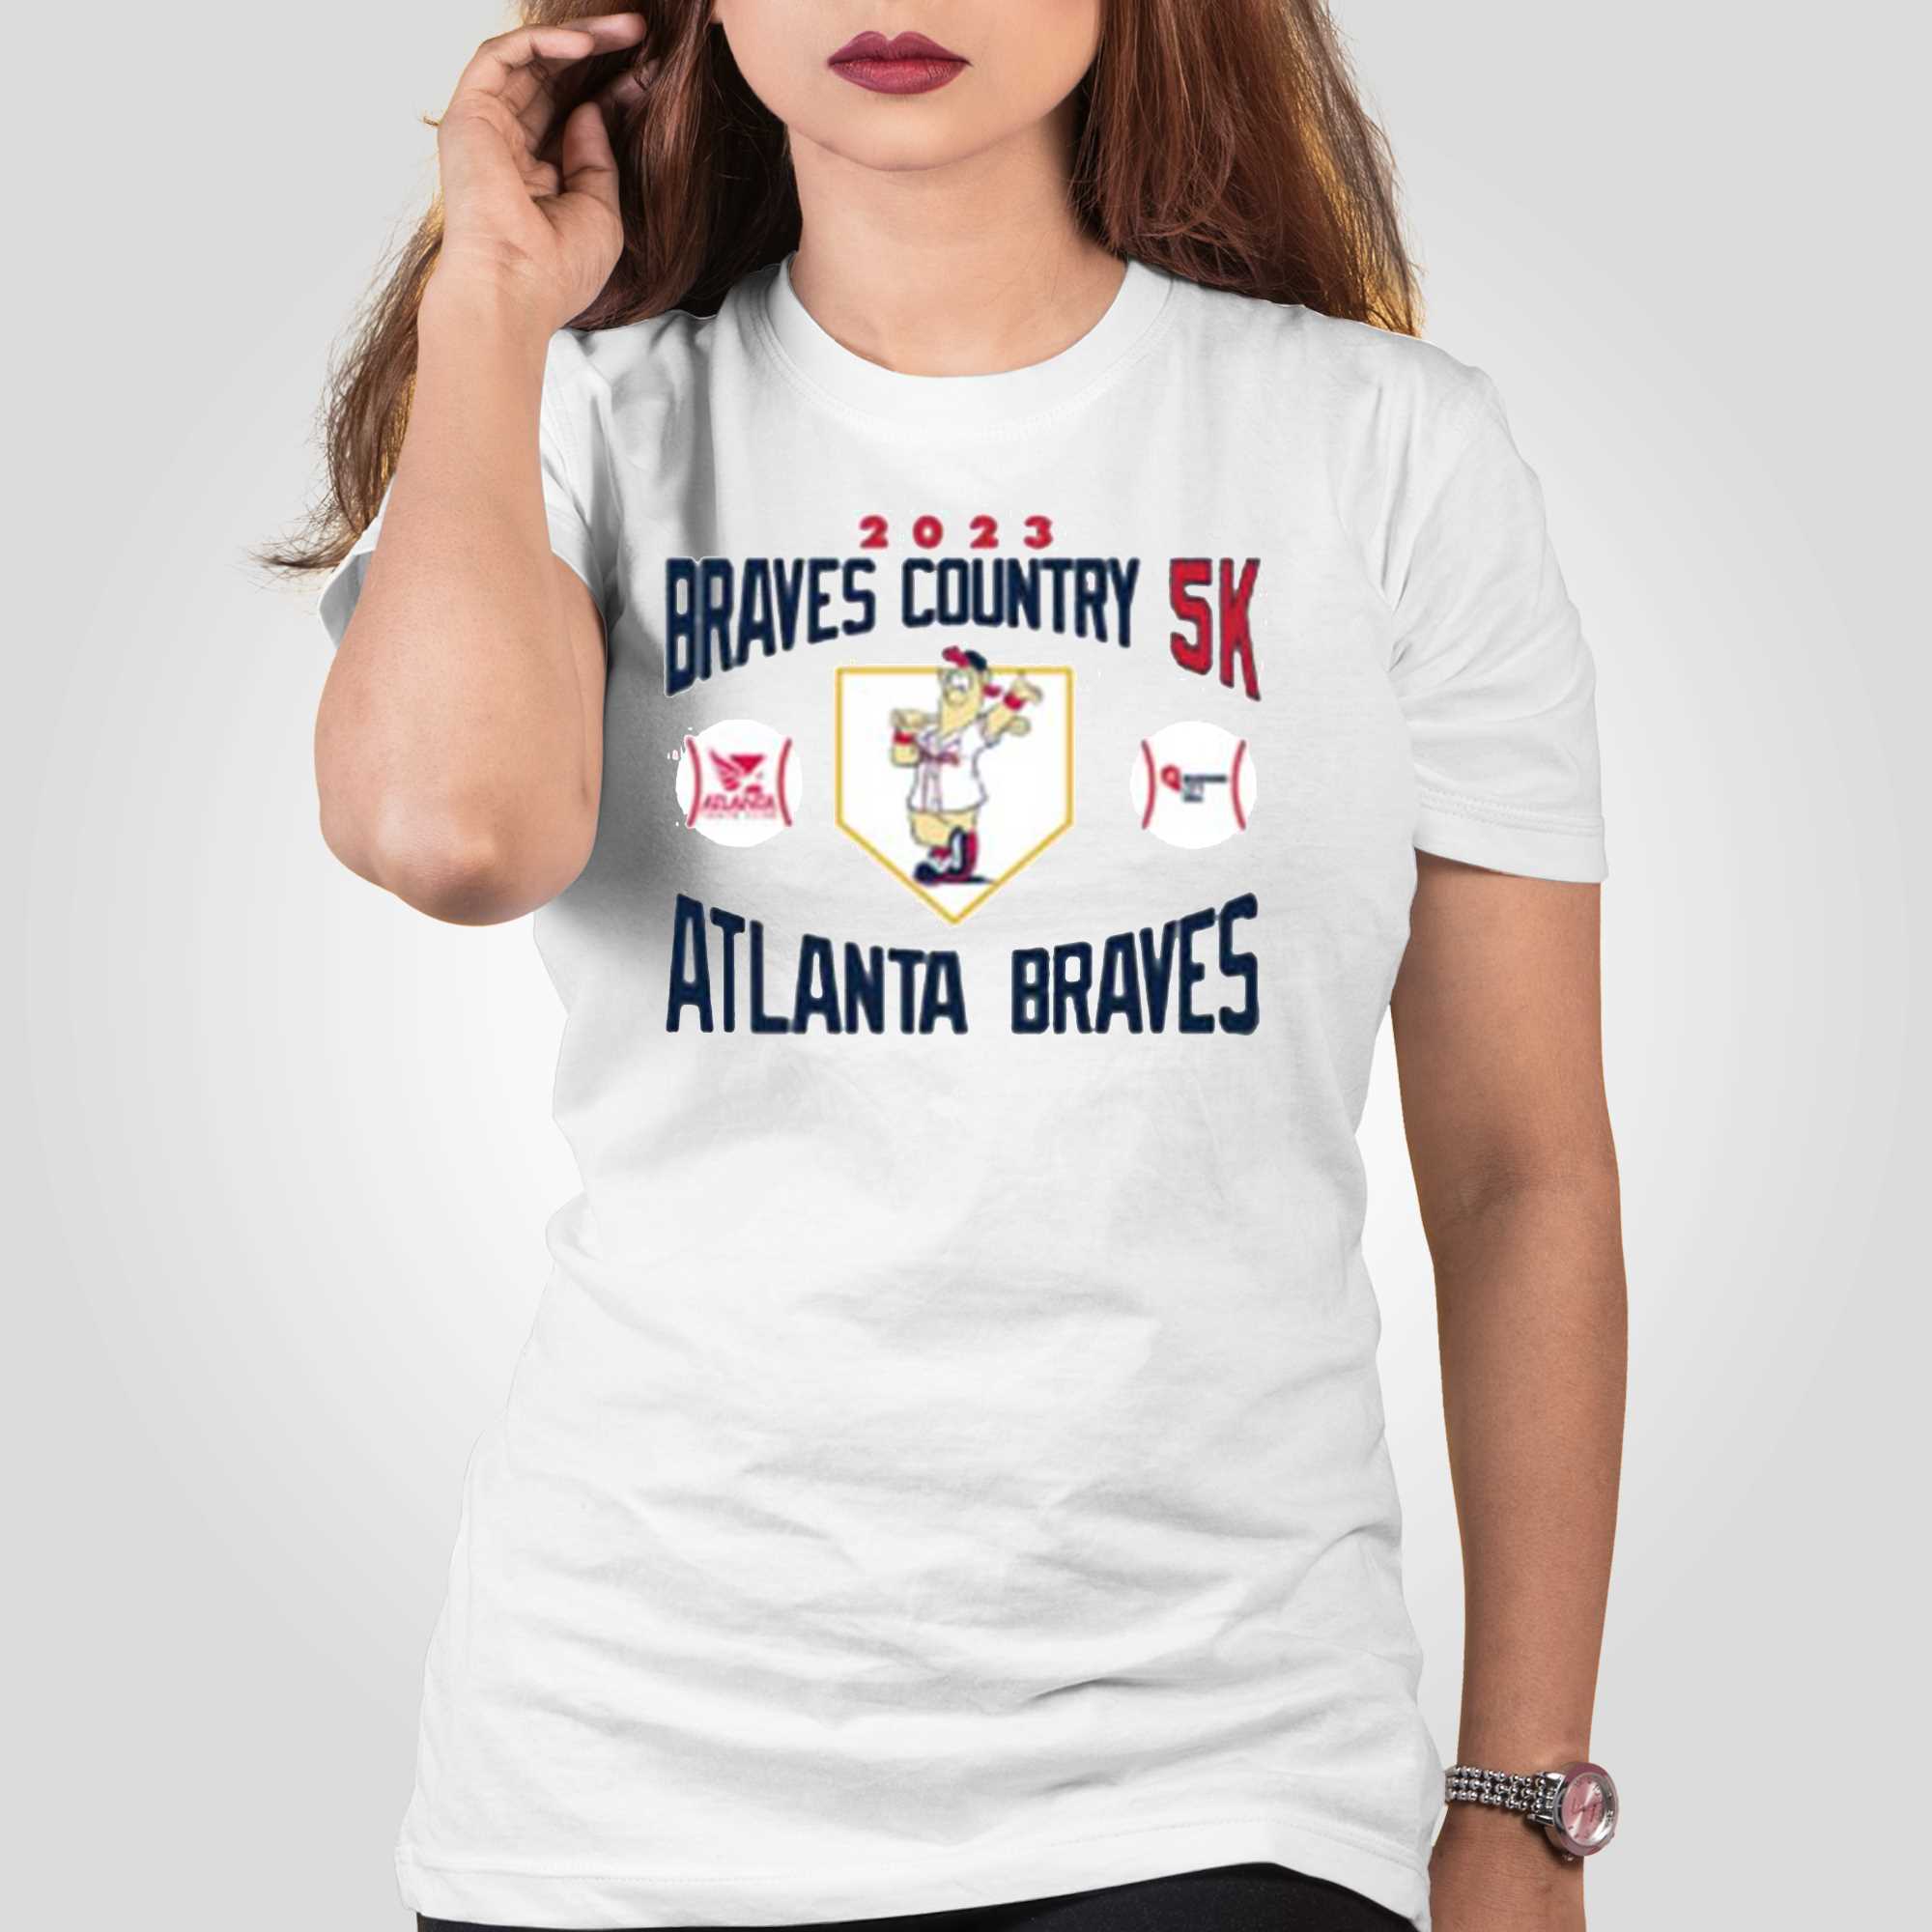 Braves Country 5k Atlanta Braves 2023 Shirt - Shibtee Clothing